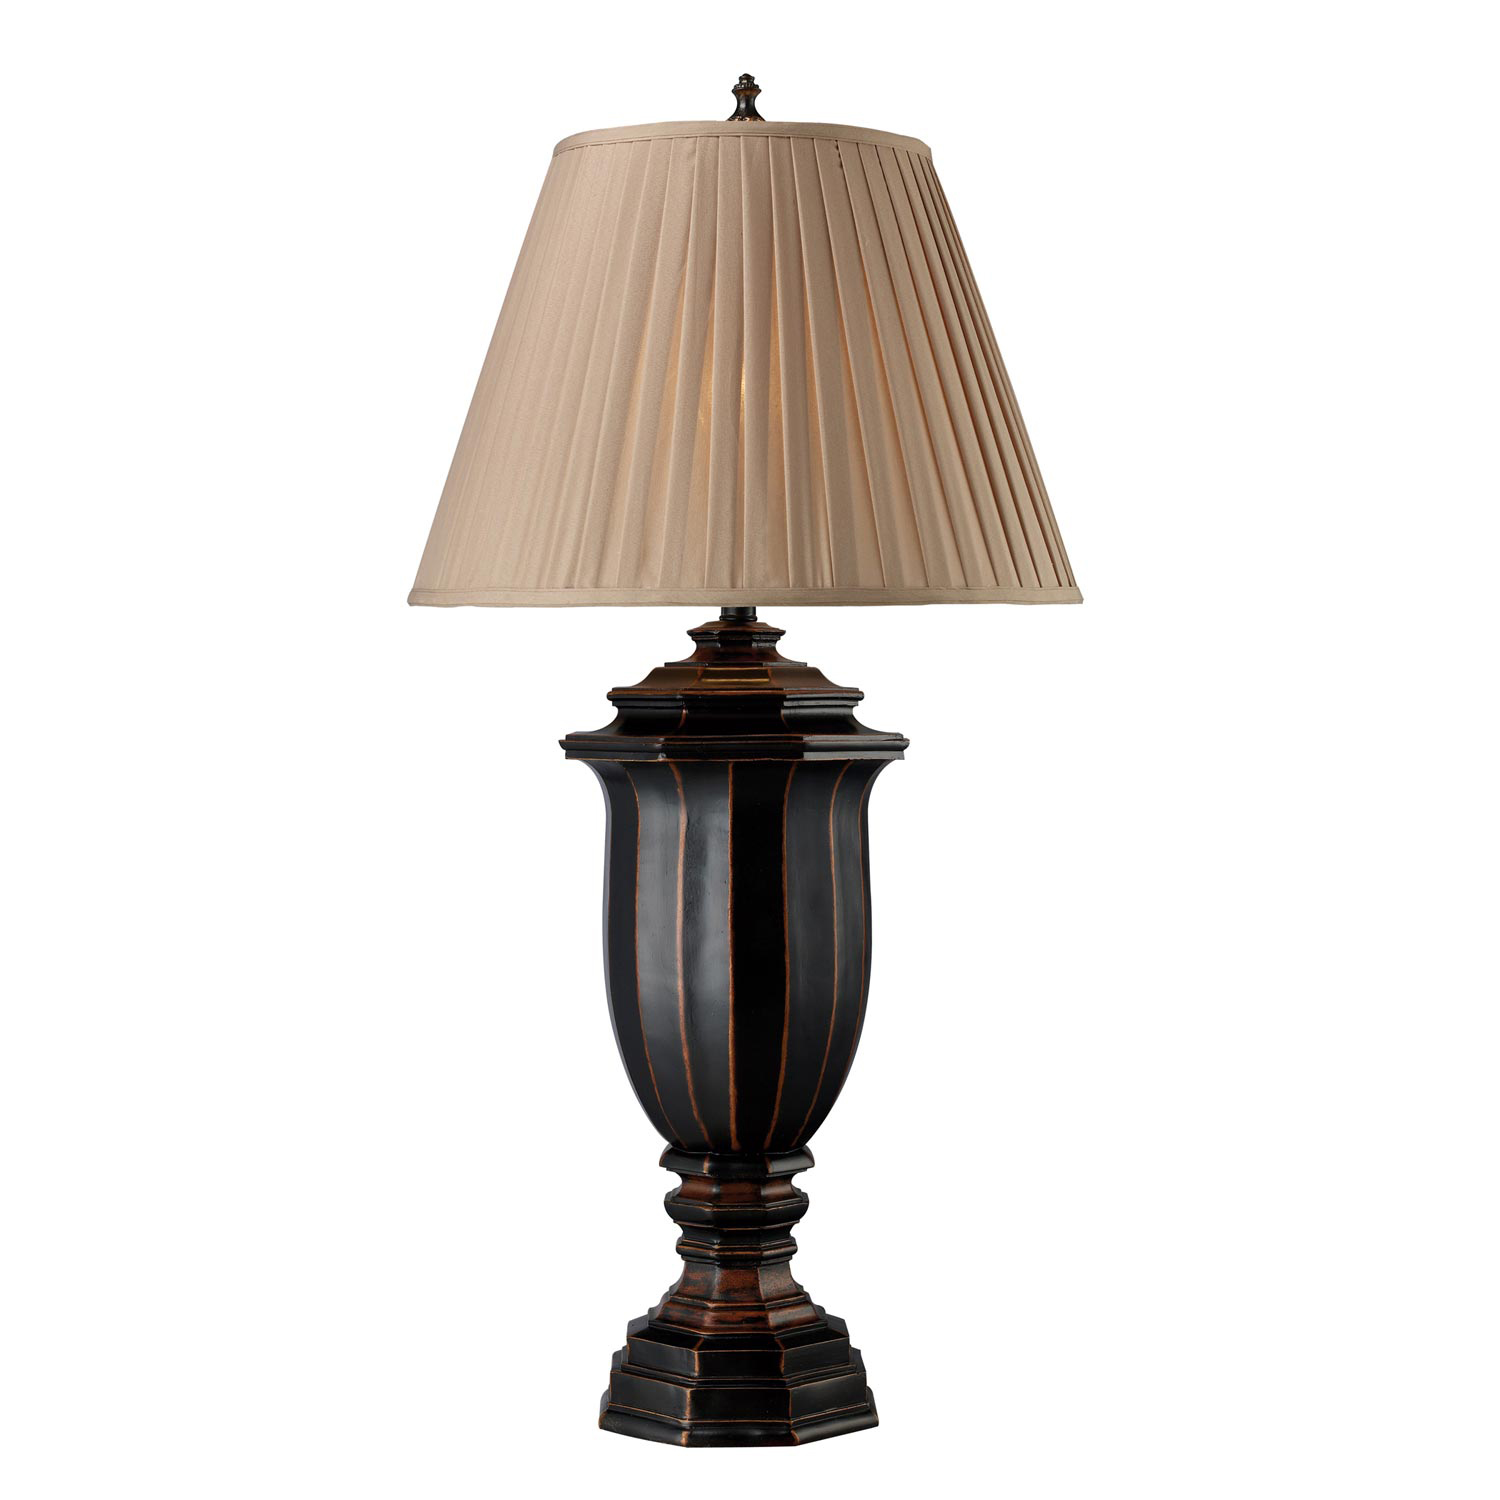 Elk Lighting D1753 Belmont Table Lamp - Italian Black with Bronze Highlights